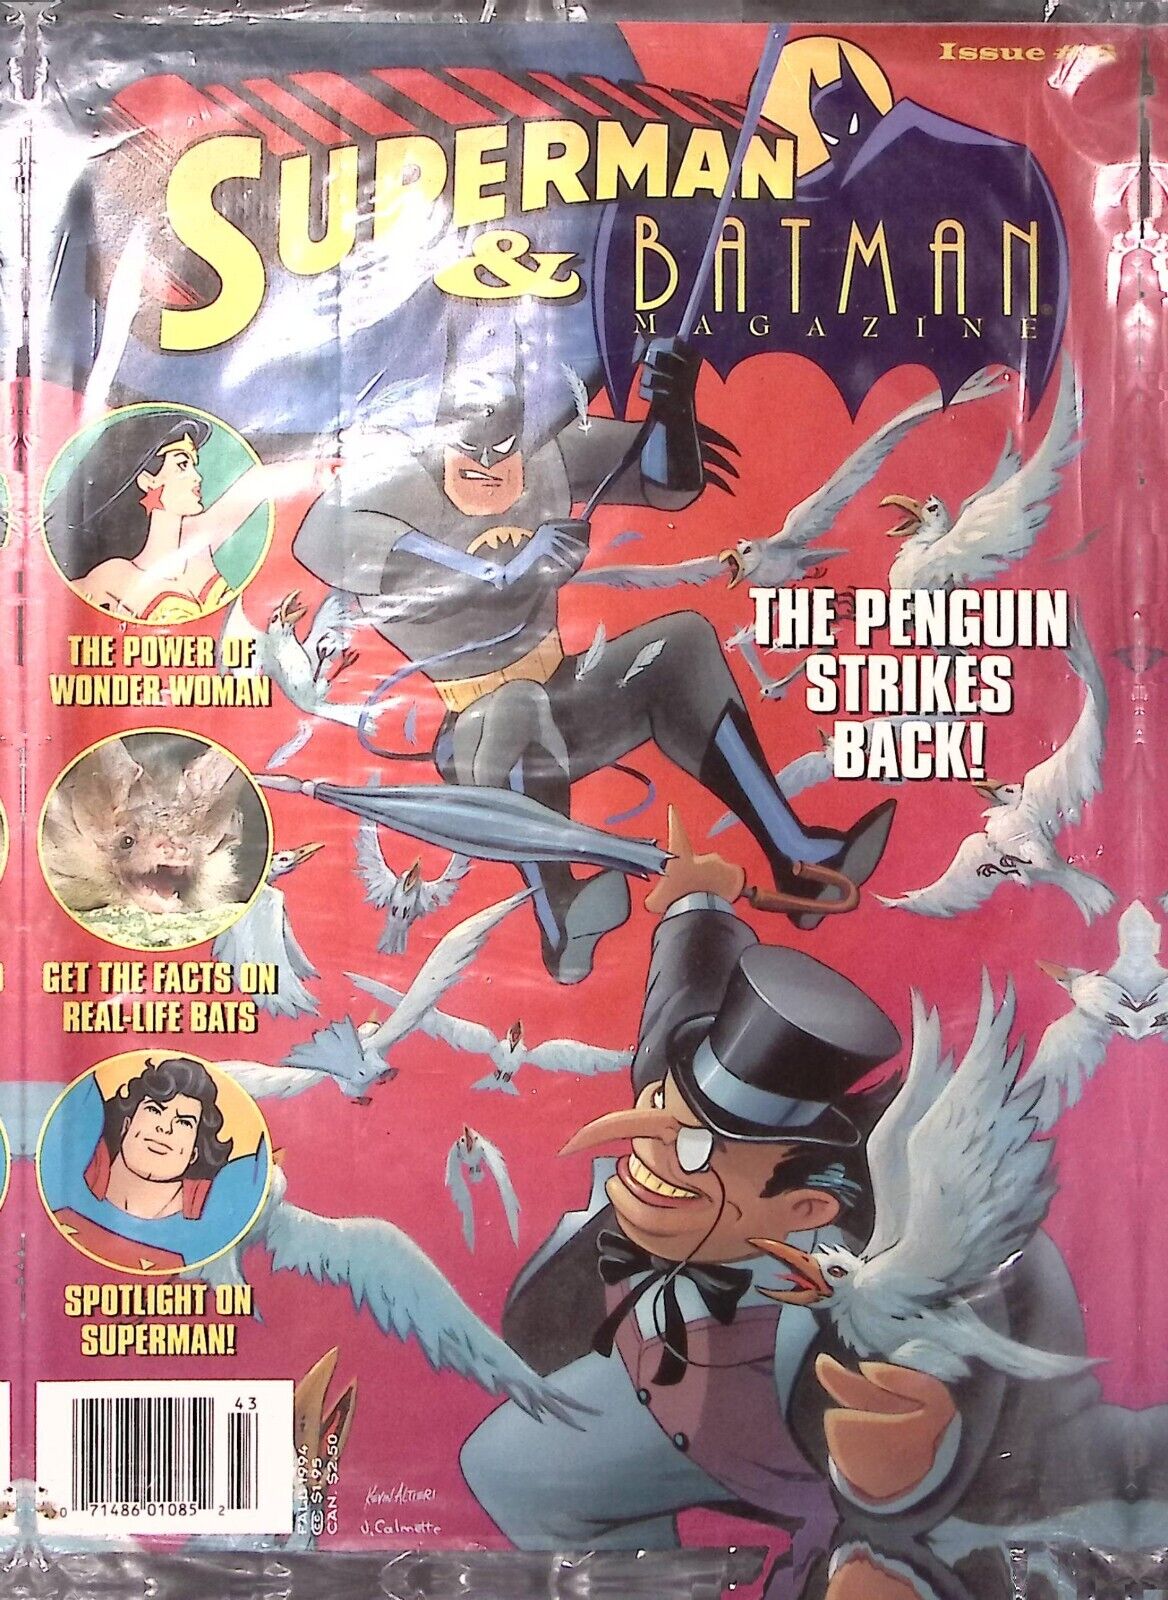 SUPERMAN & BATMAN MAGAZINE ISSUE #6 FALL 1994 PENGUIN STILL FACTORY SEALED Z2230